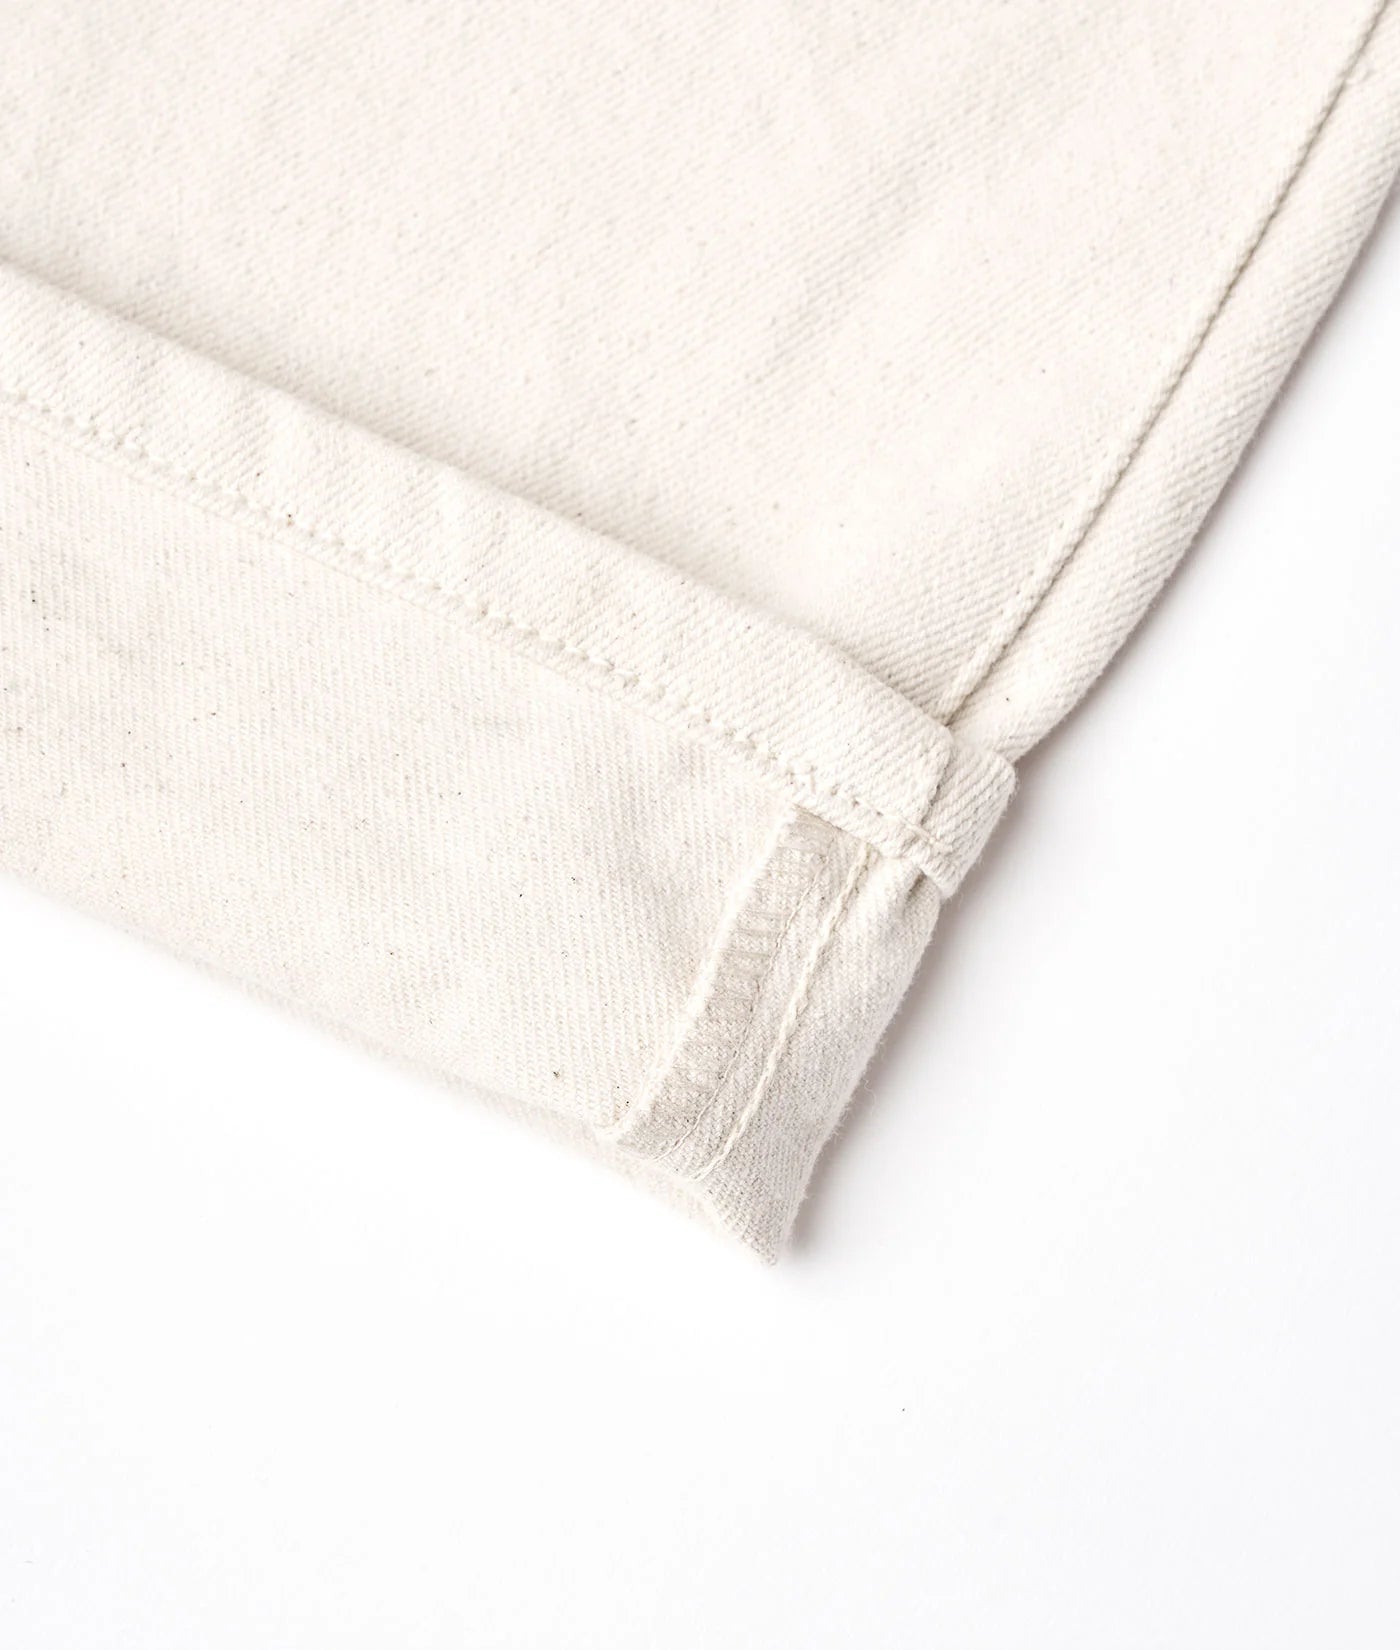 How Denim Fabric is Made - ORDNUR